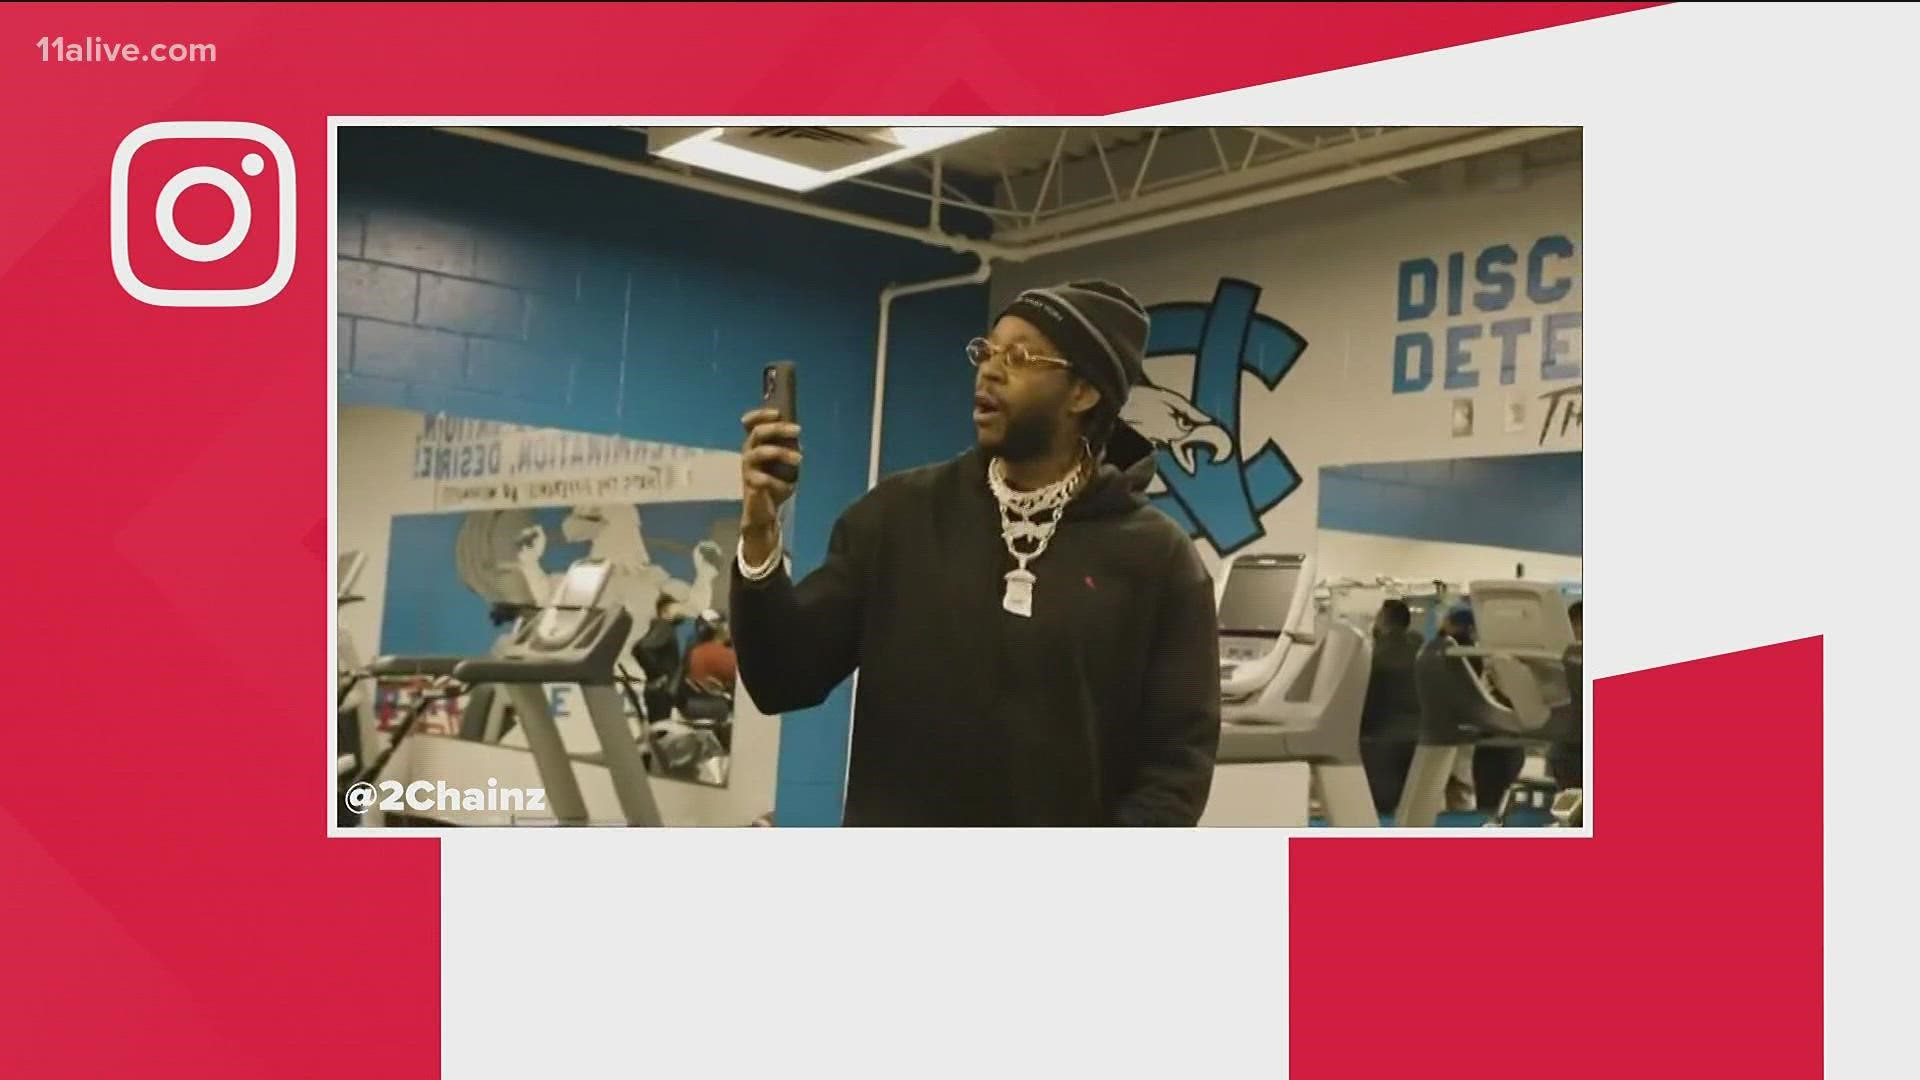 North Clayton High School has a new gym thanks to rapper 2 Chainz.